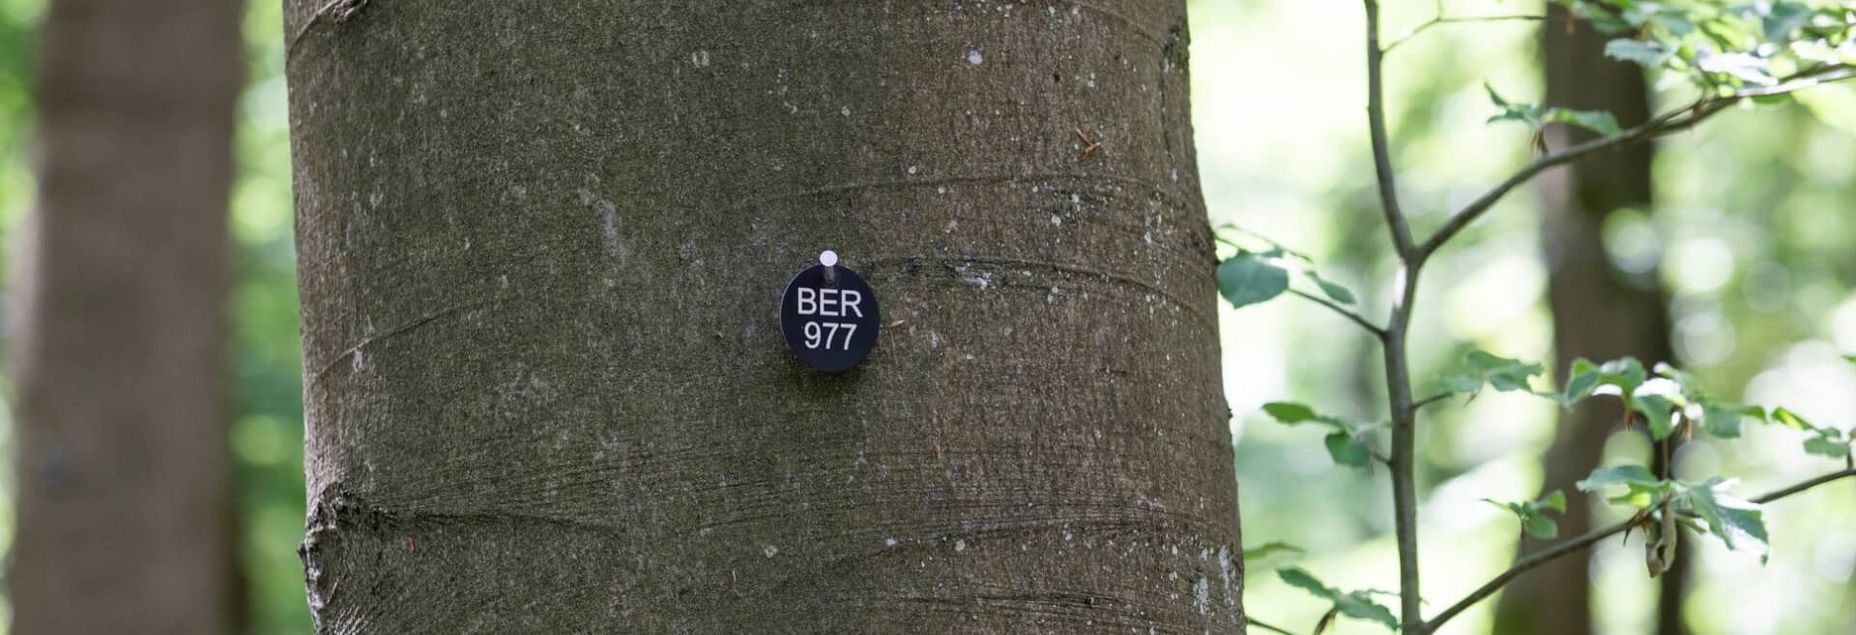 Baum BER 977 - Plakette